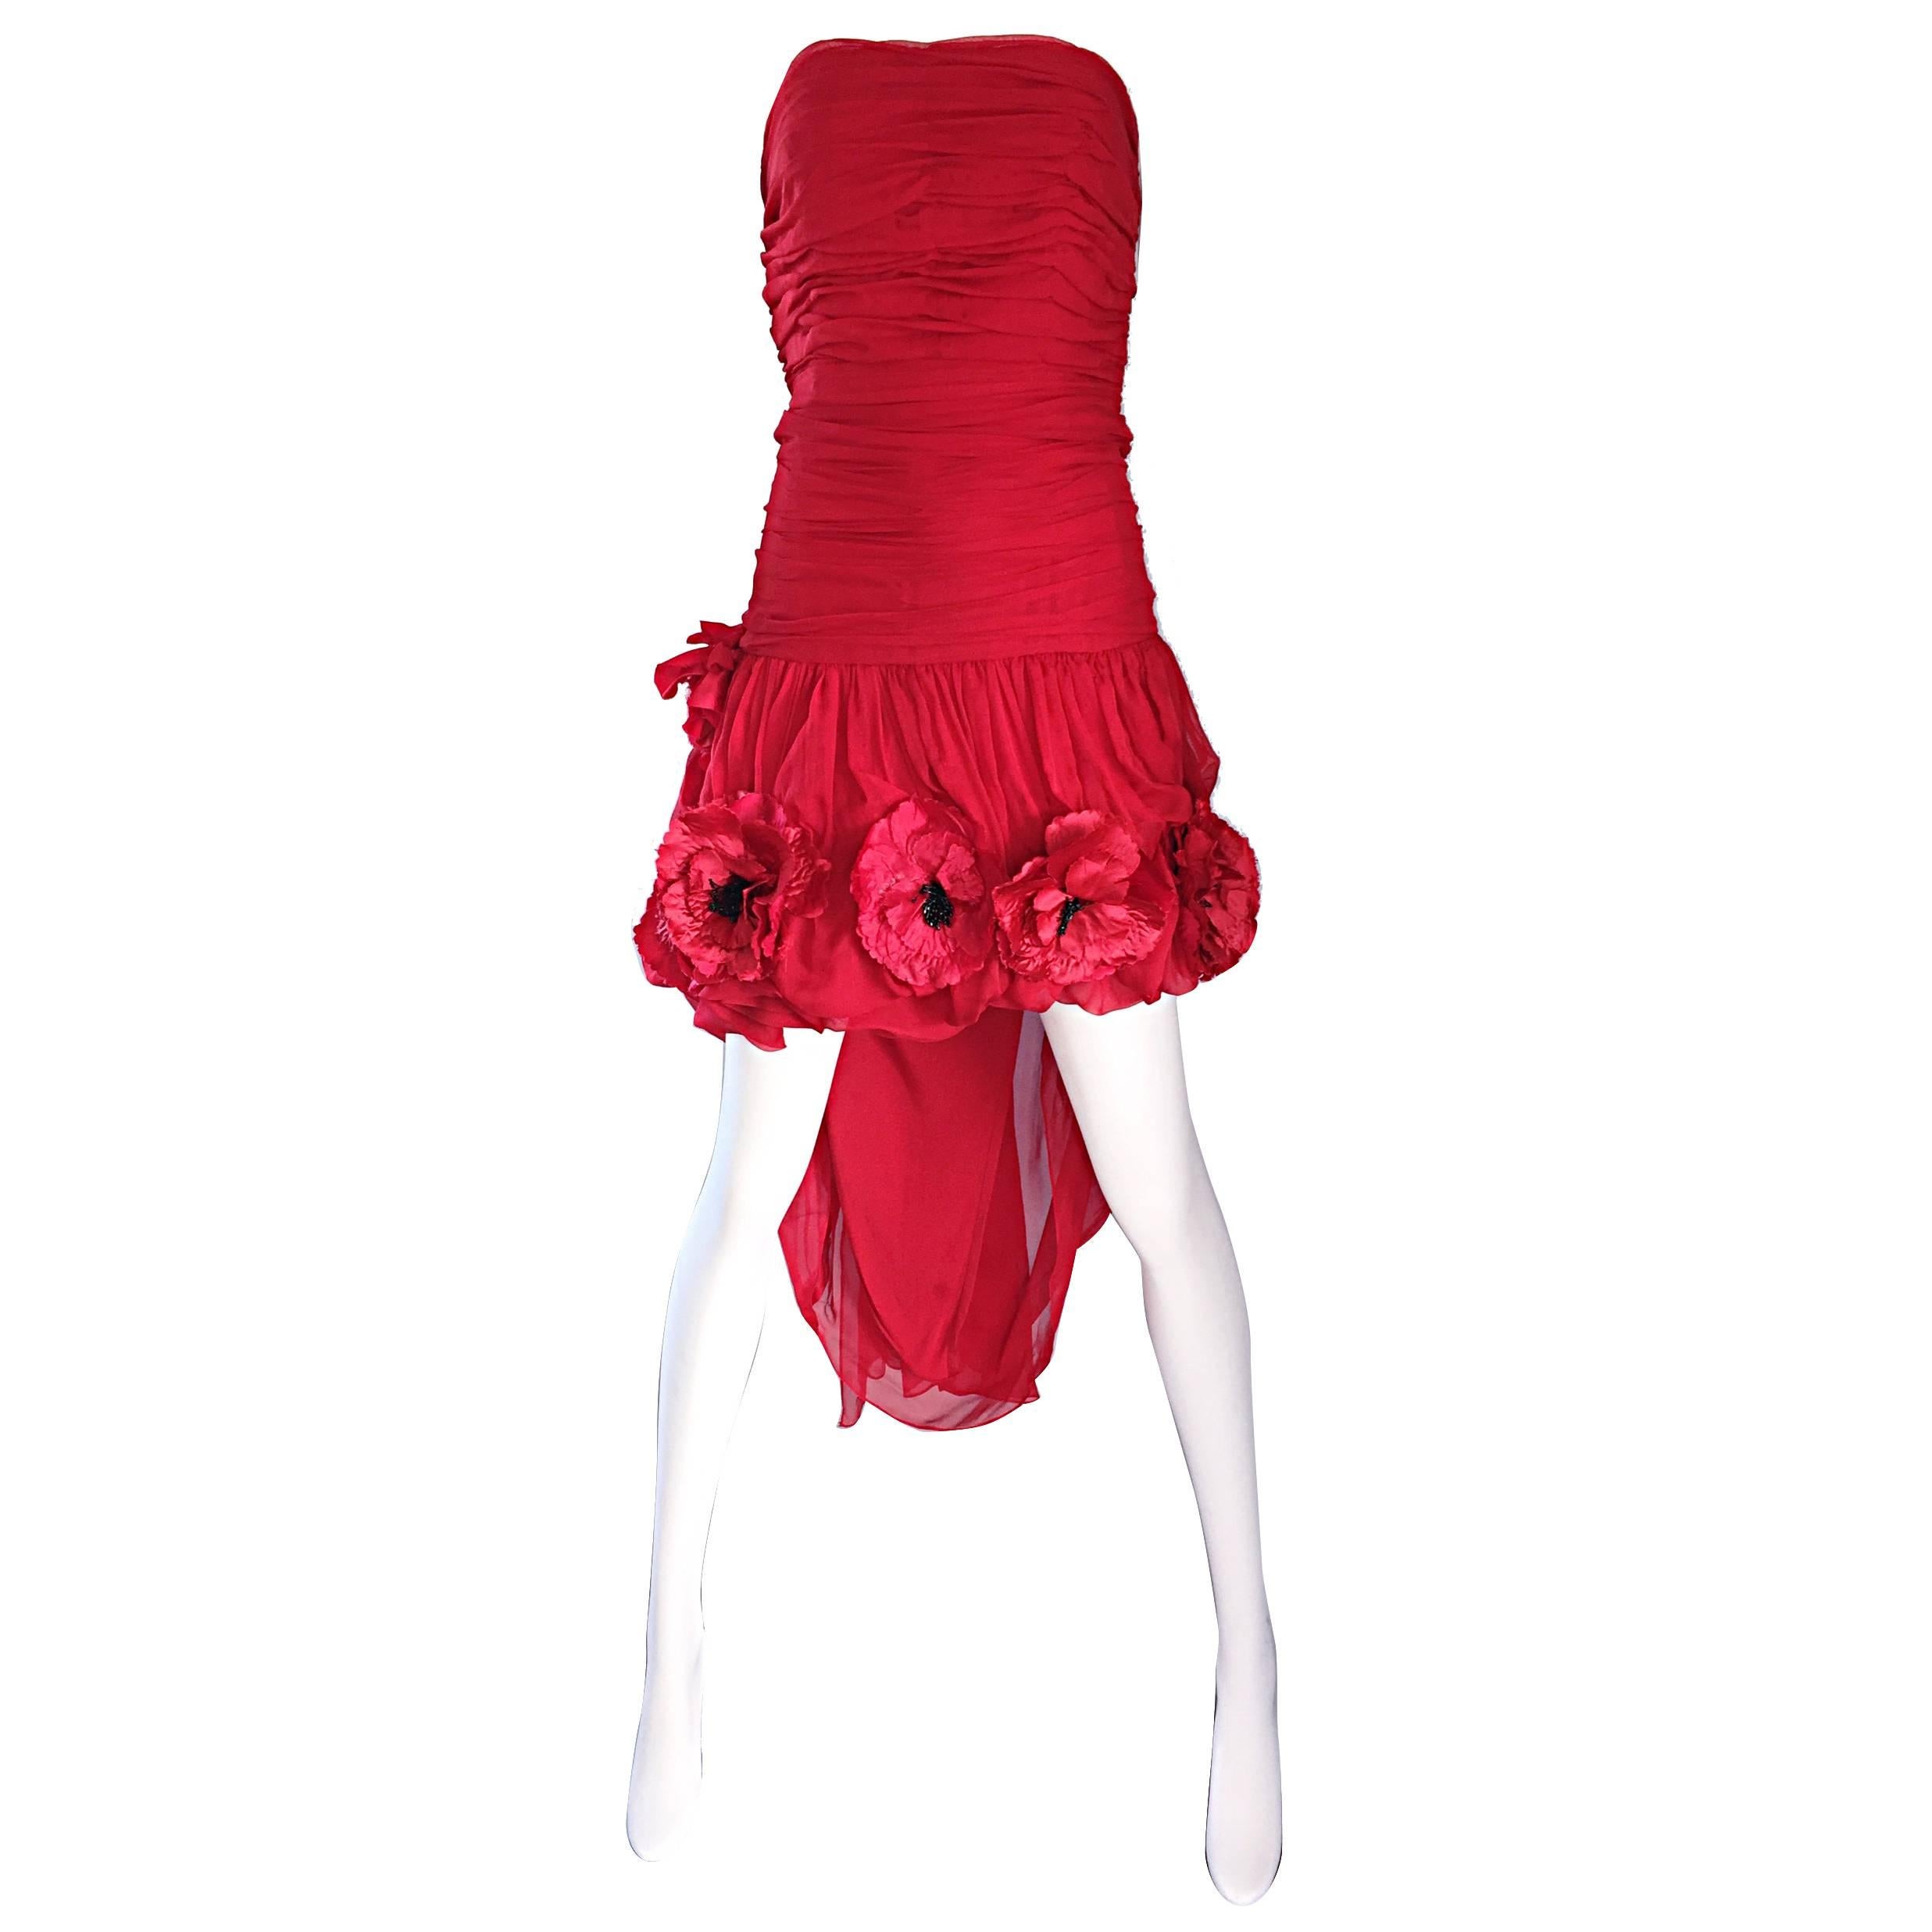 Vintage Christian Lacroix Lipstick Red Chiffon Strapless High - Lo Poppy Dress